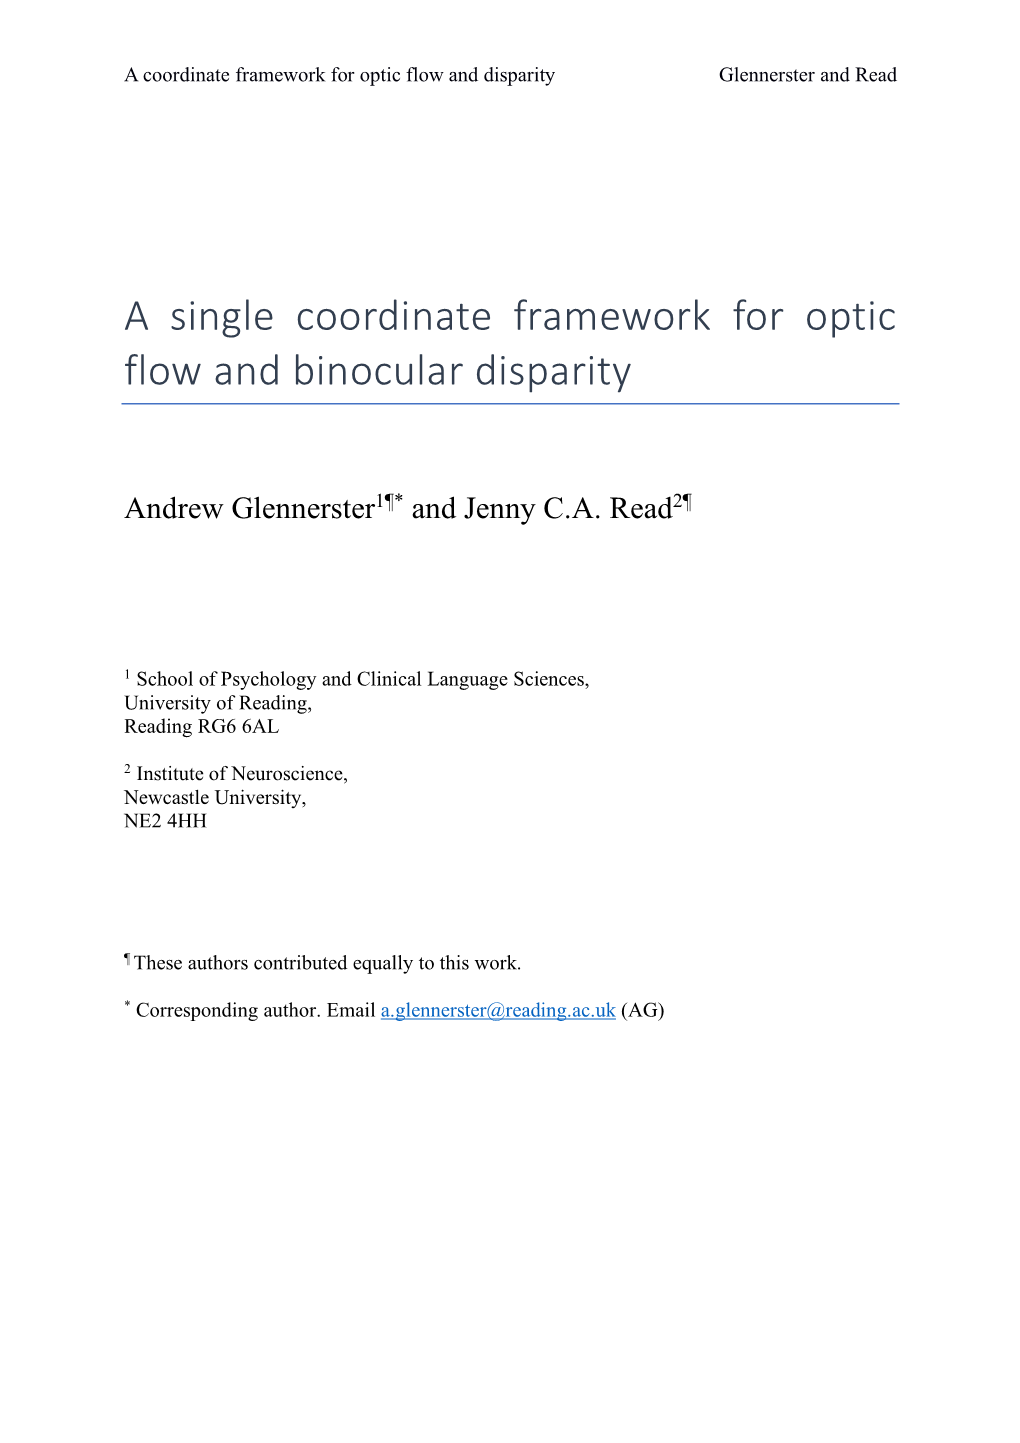 A Single Coordinate Framework for Optic Flow and Binocular Disparity